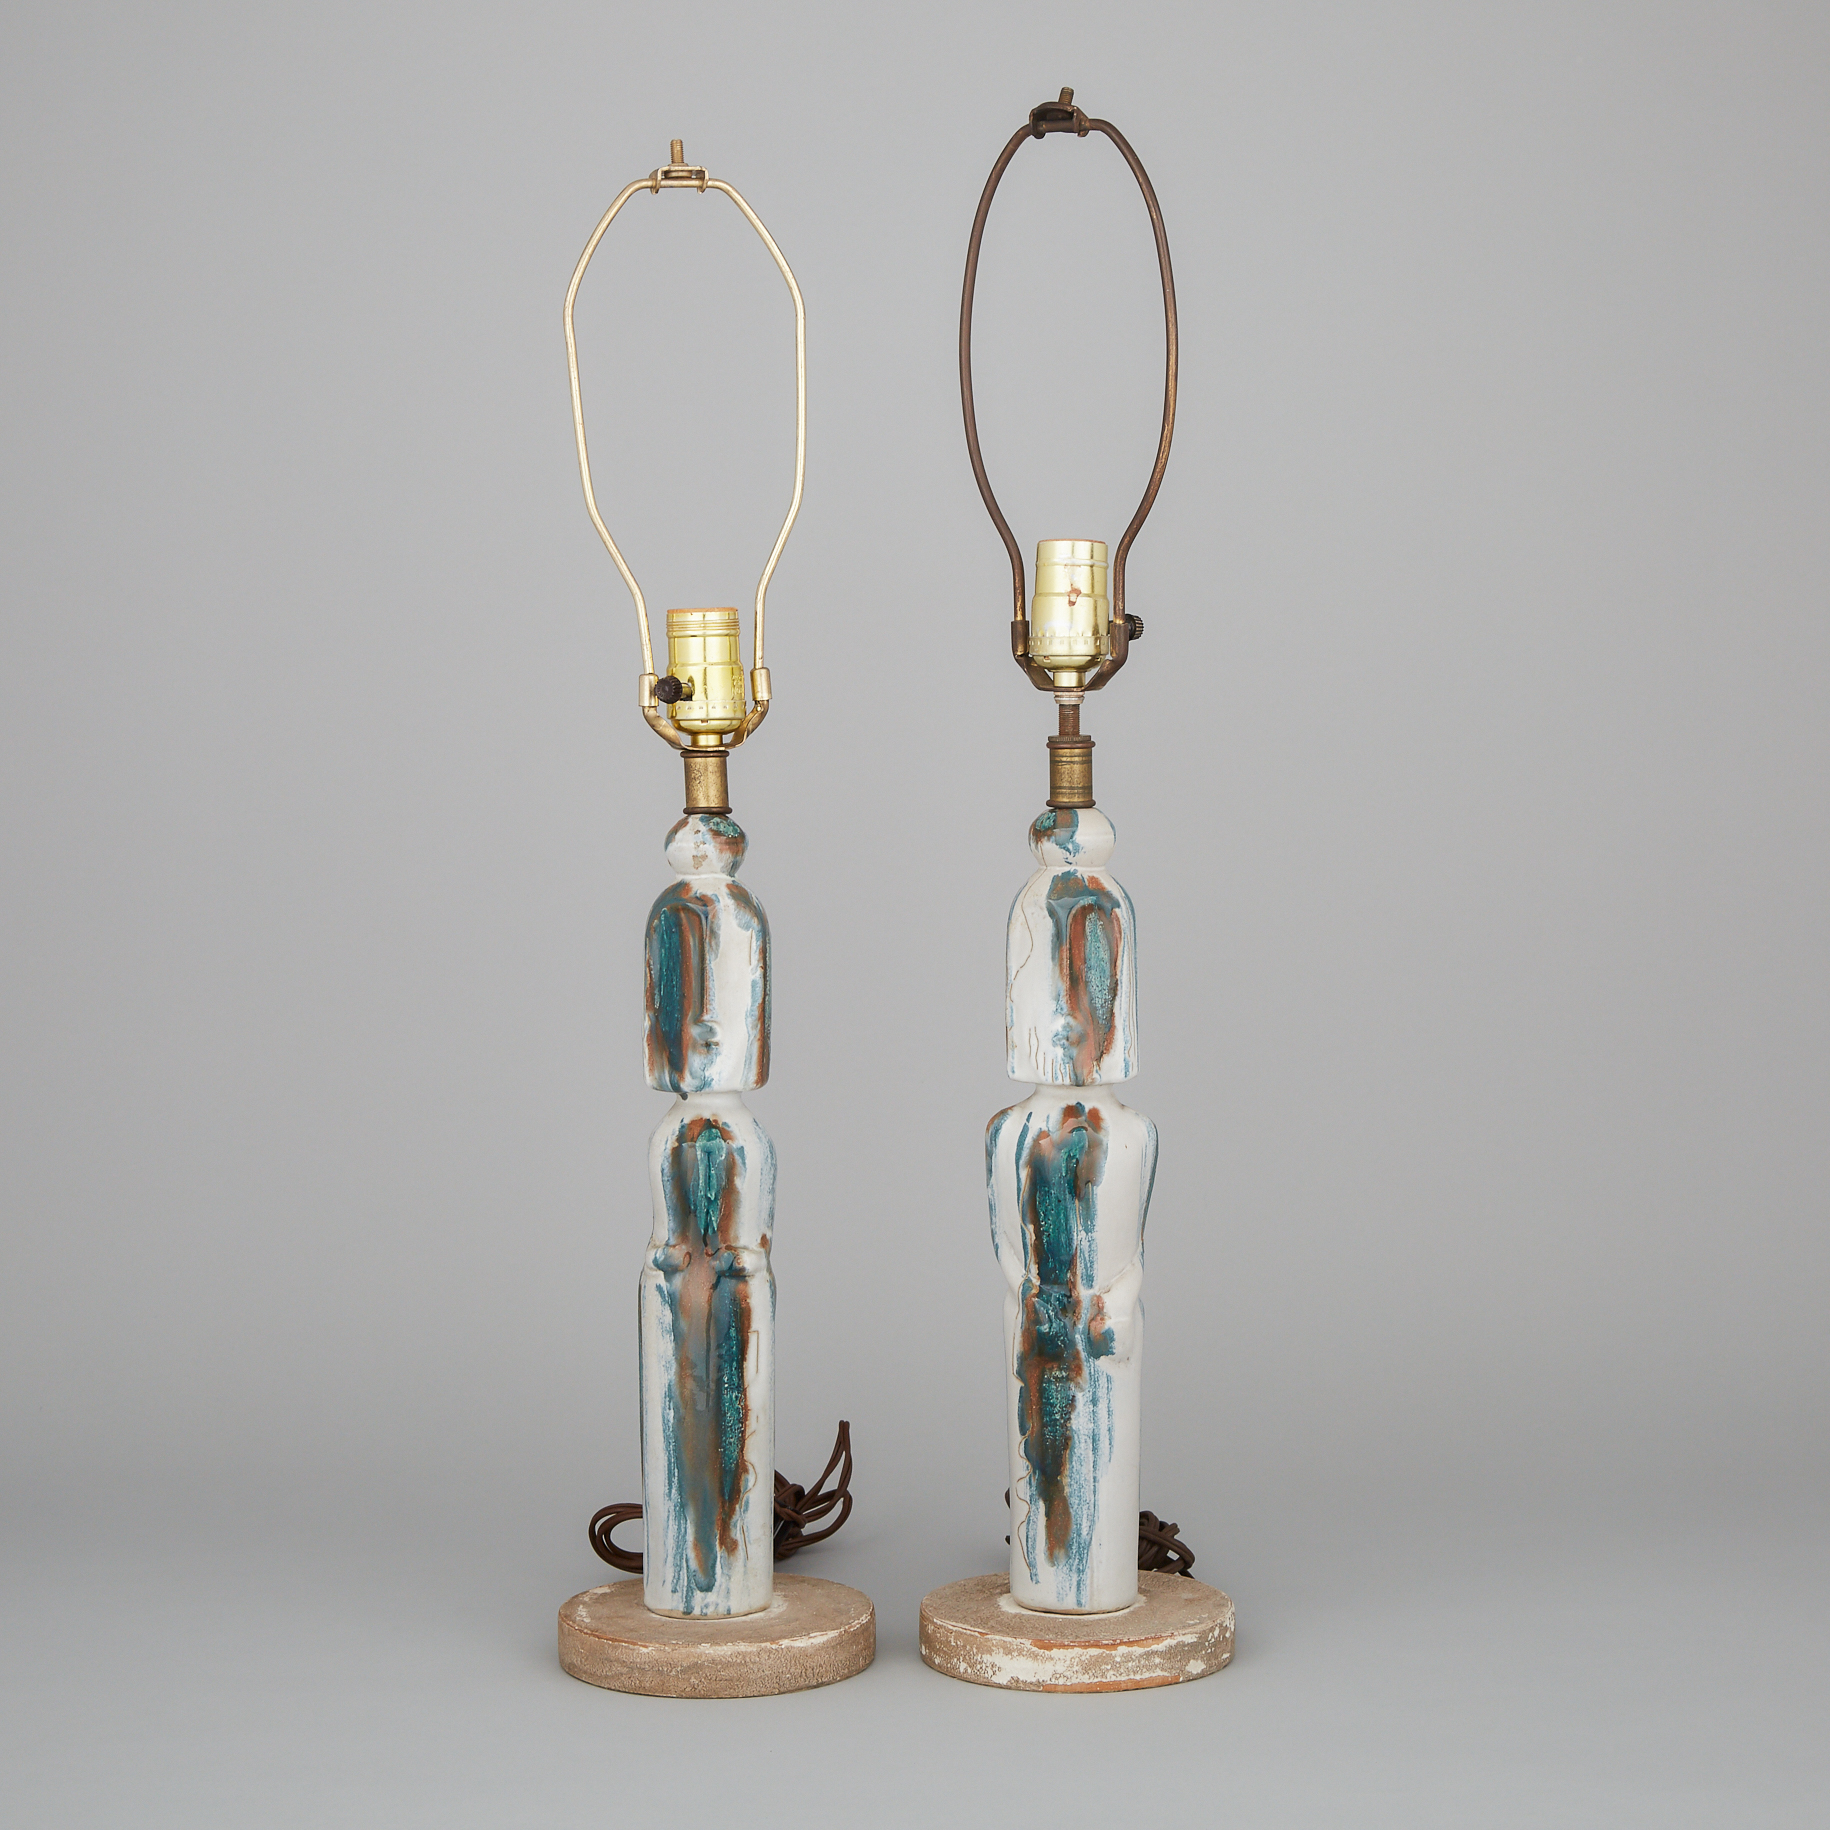 Pair of Marianna Von Allesch Figural Table Lamps, mid-20th century